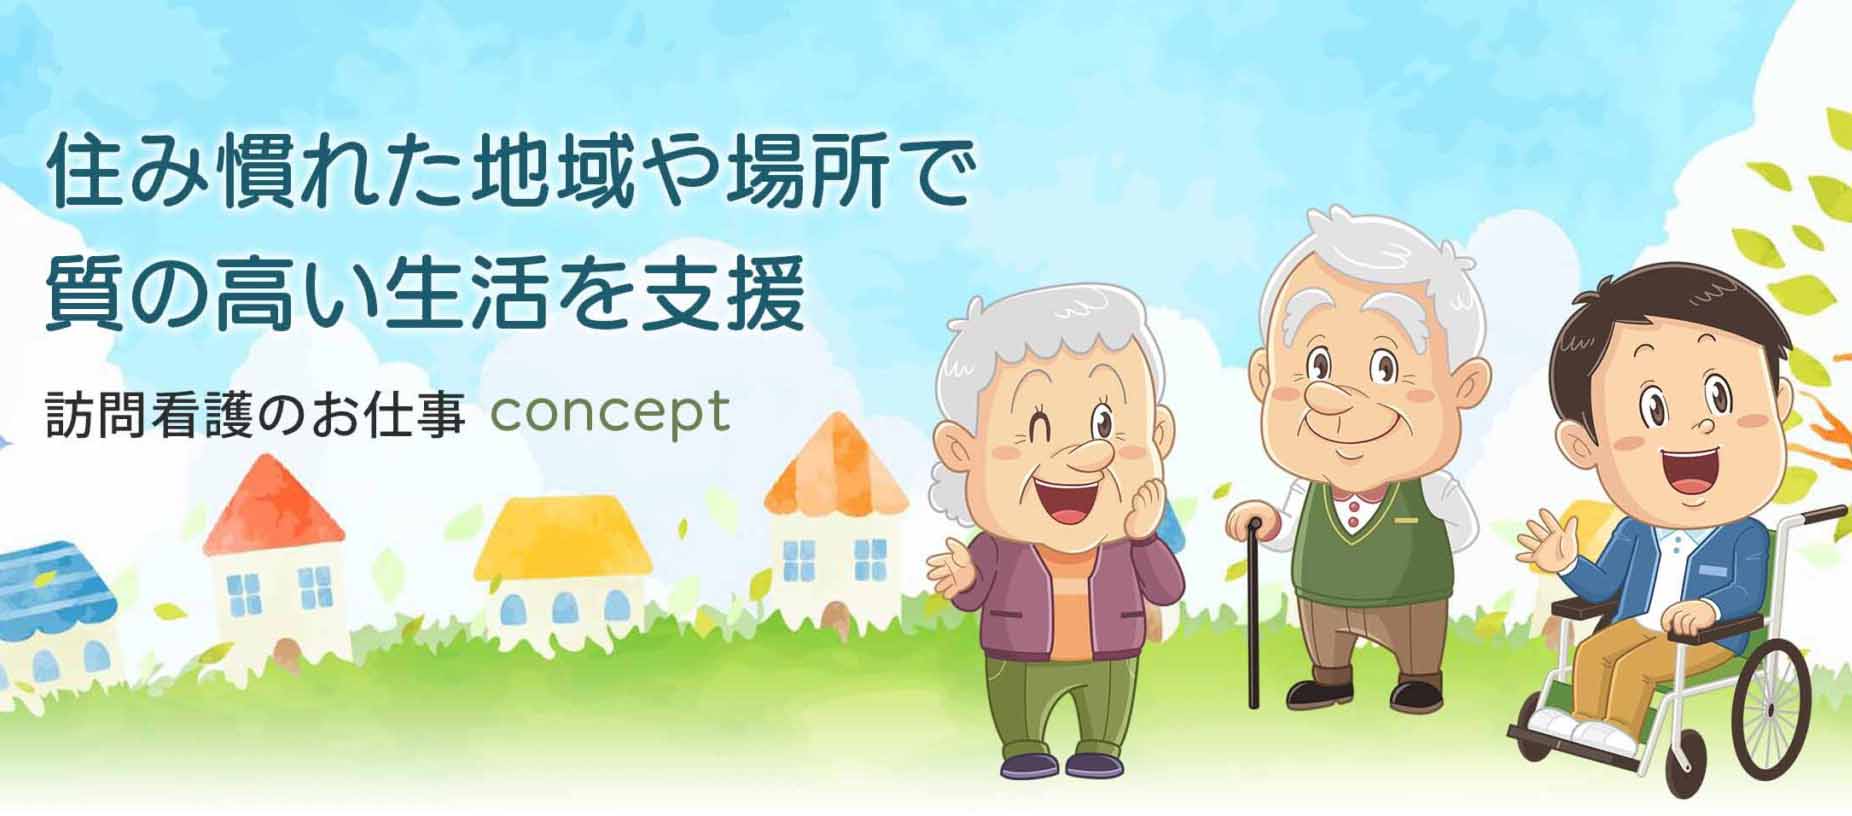 concept_home_care_s_01